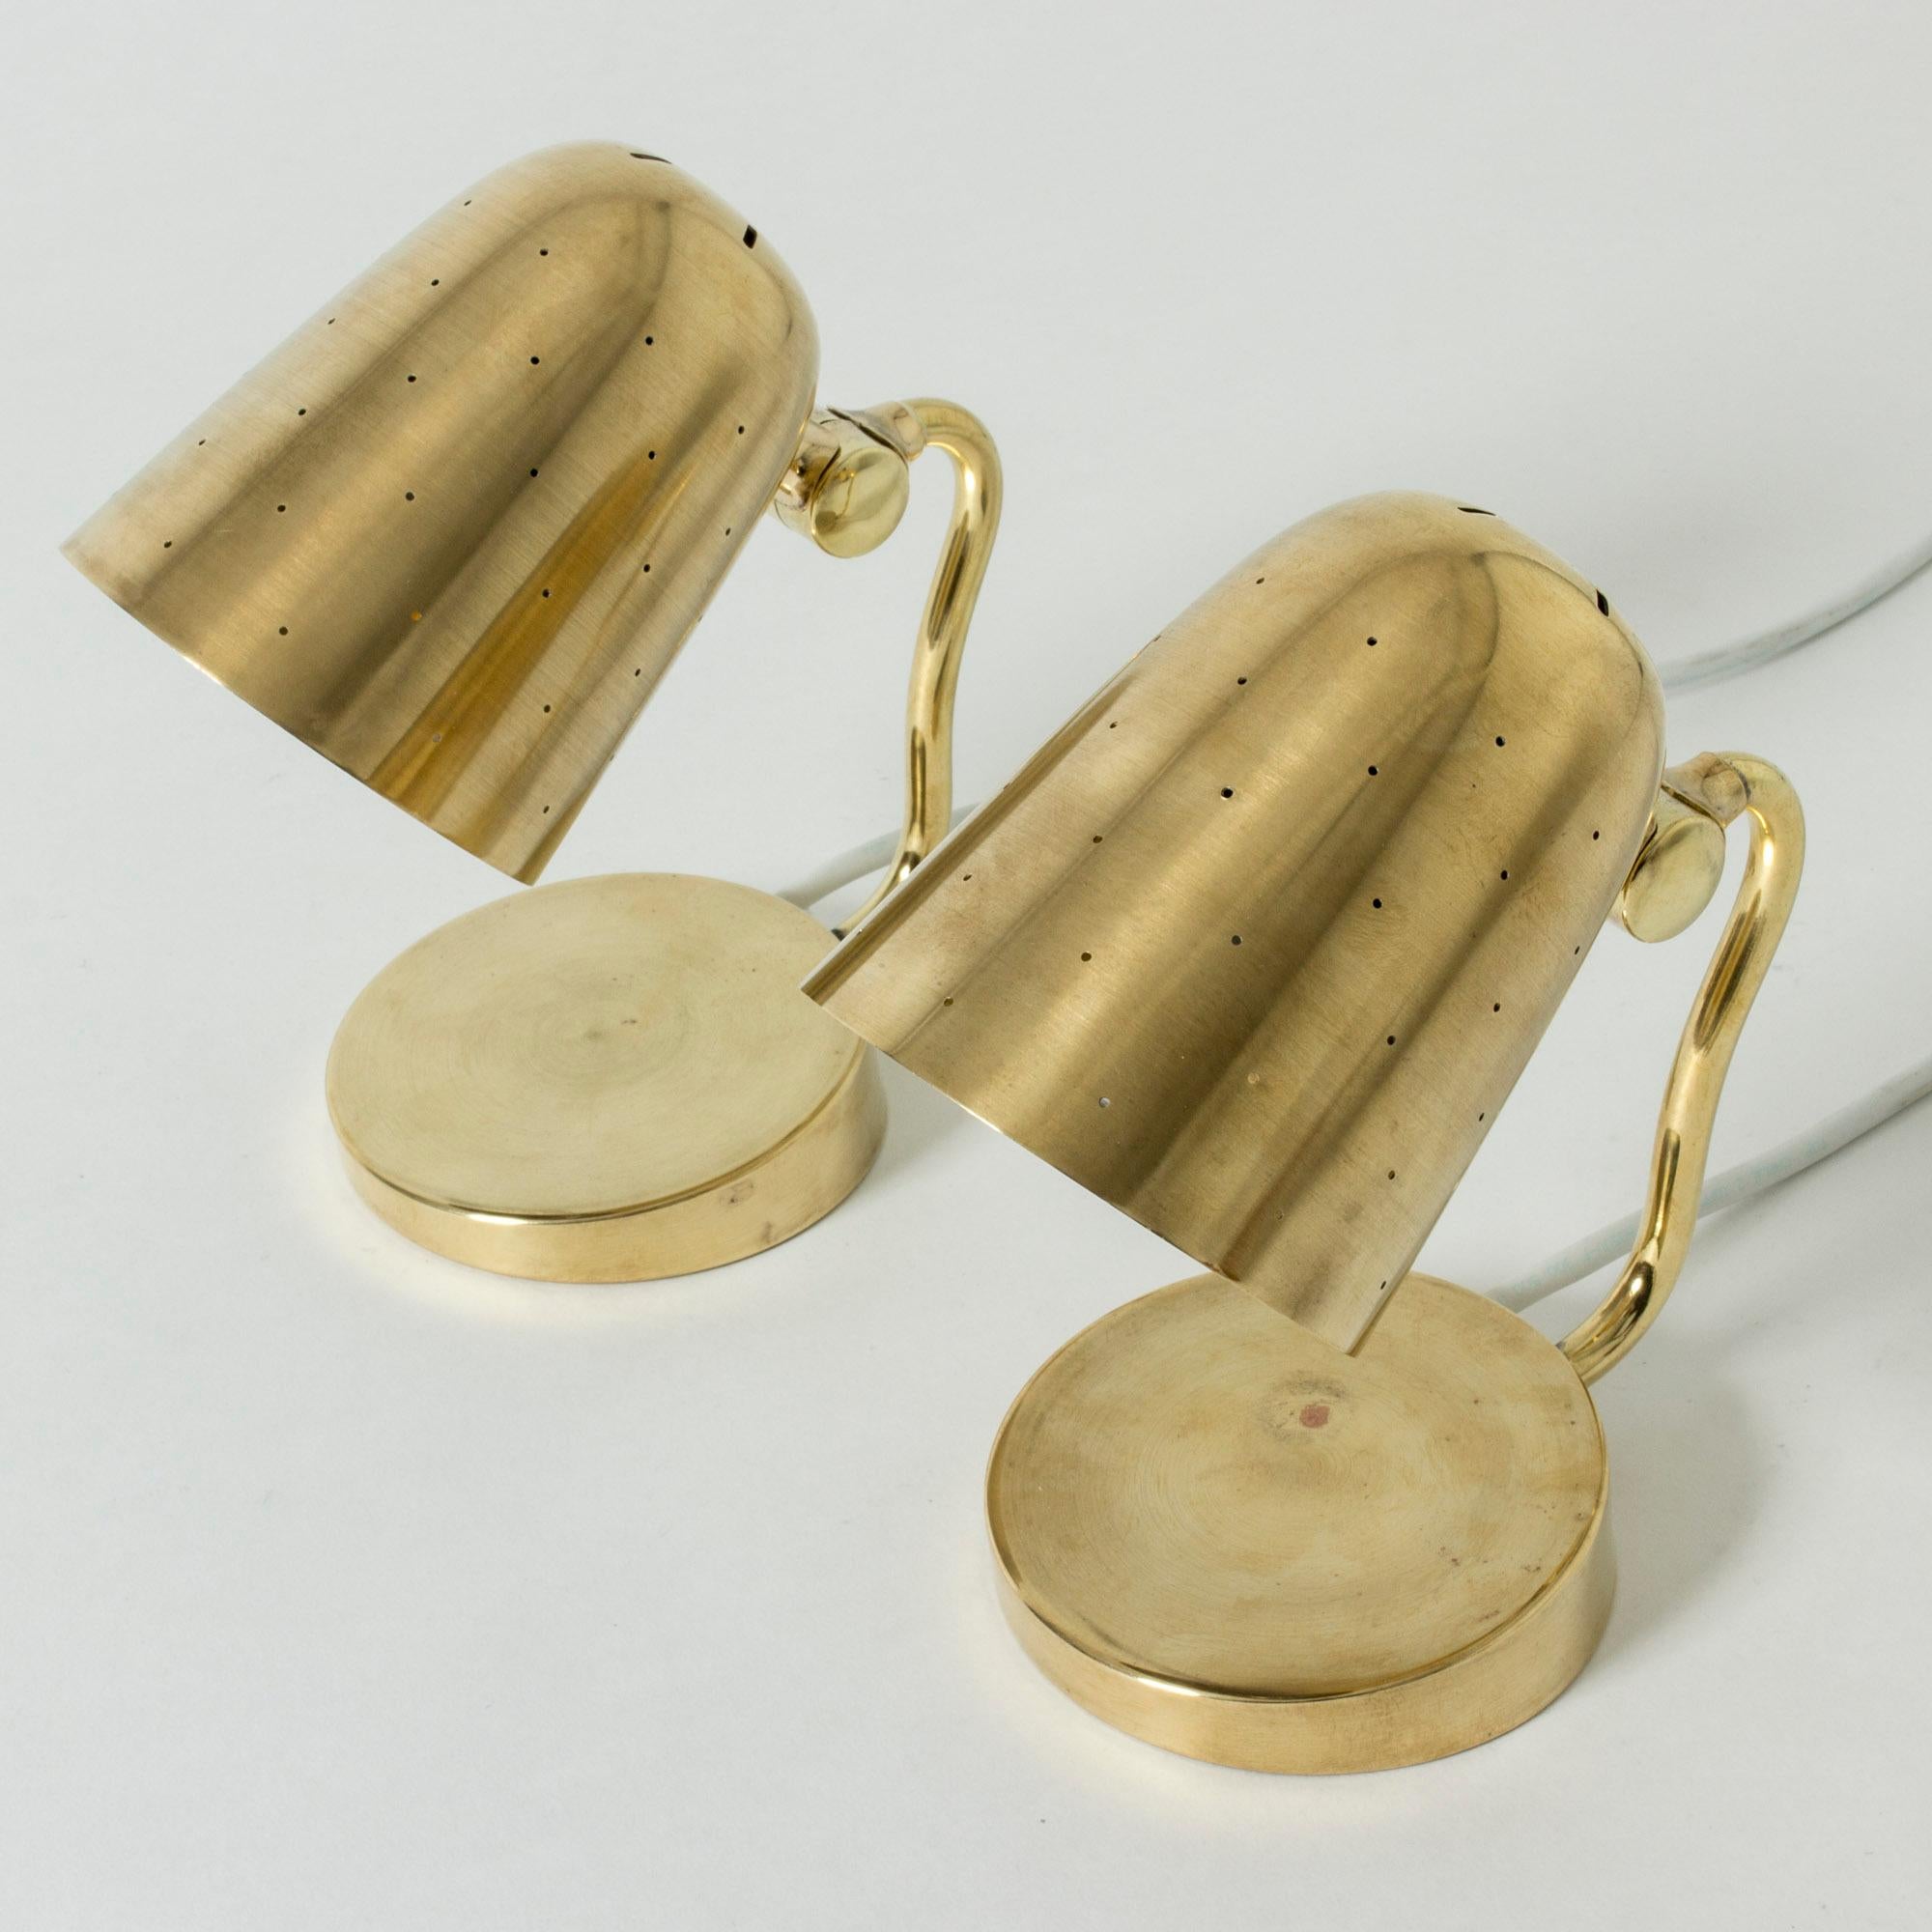 Scandinavian Modern Pair of Brass Table Lamps from Boréns, Sweden, 1950s